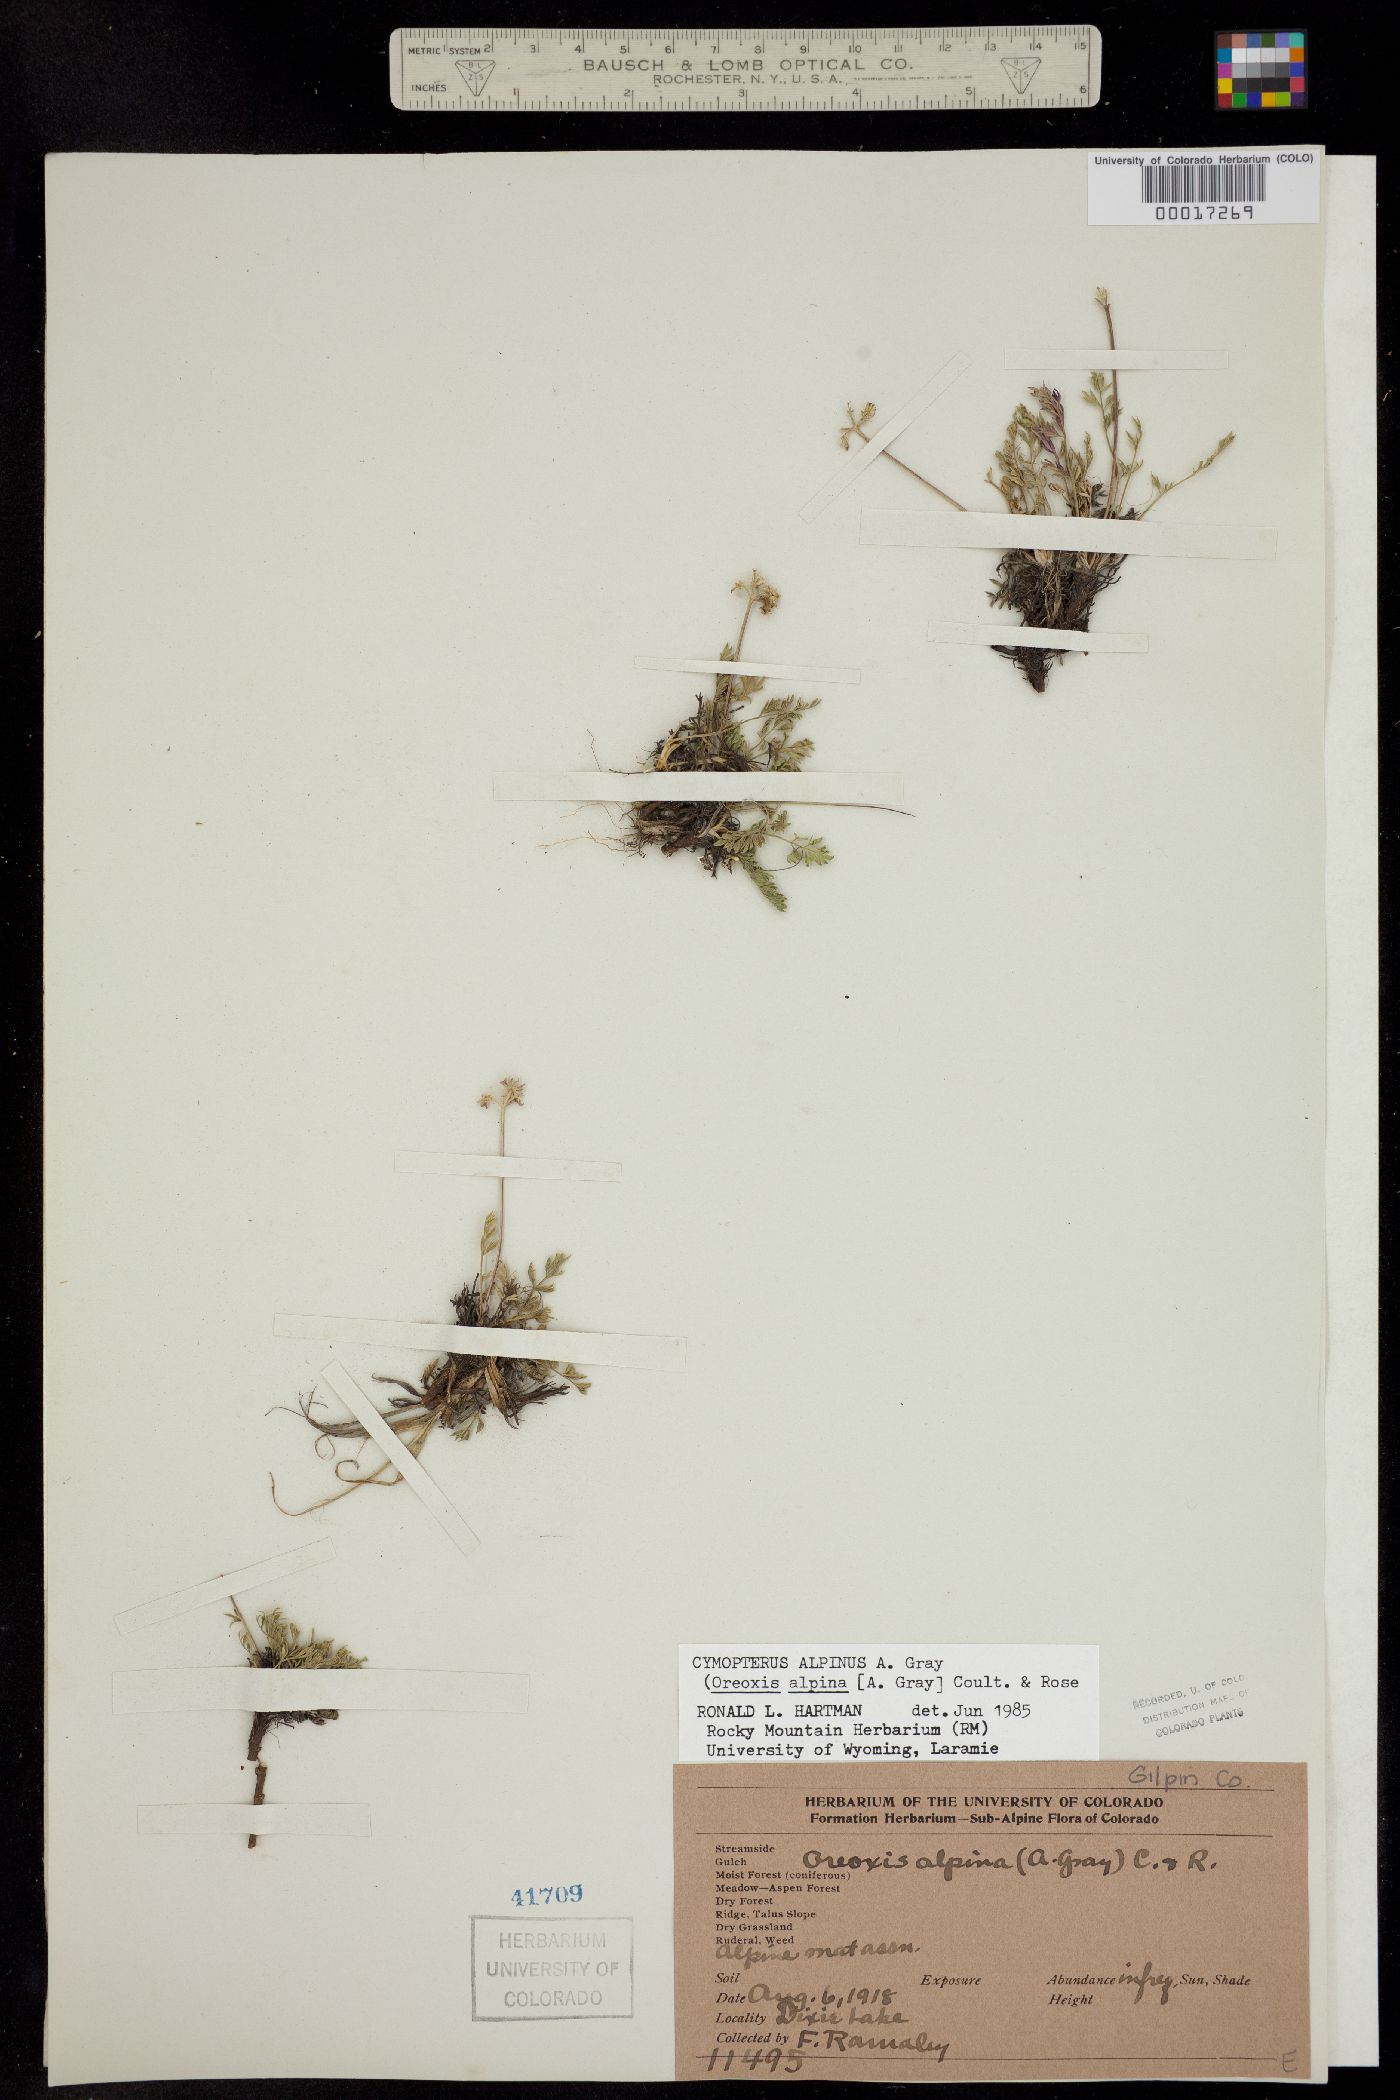 Oreoxis alpina ssp. alpina image